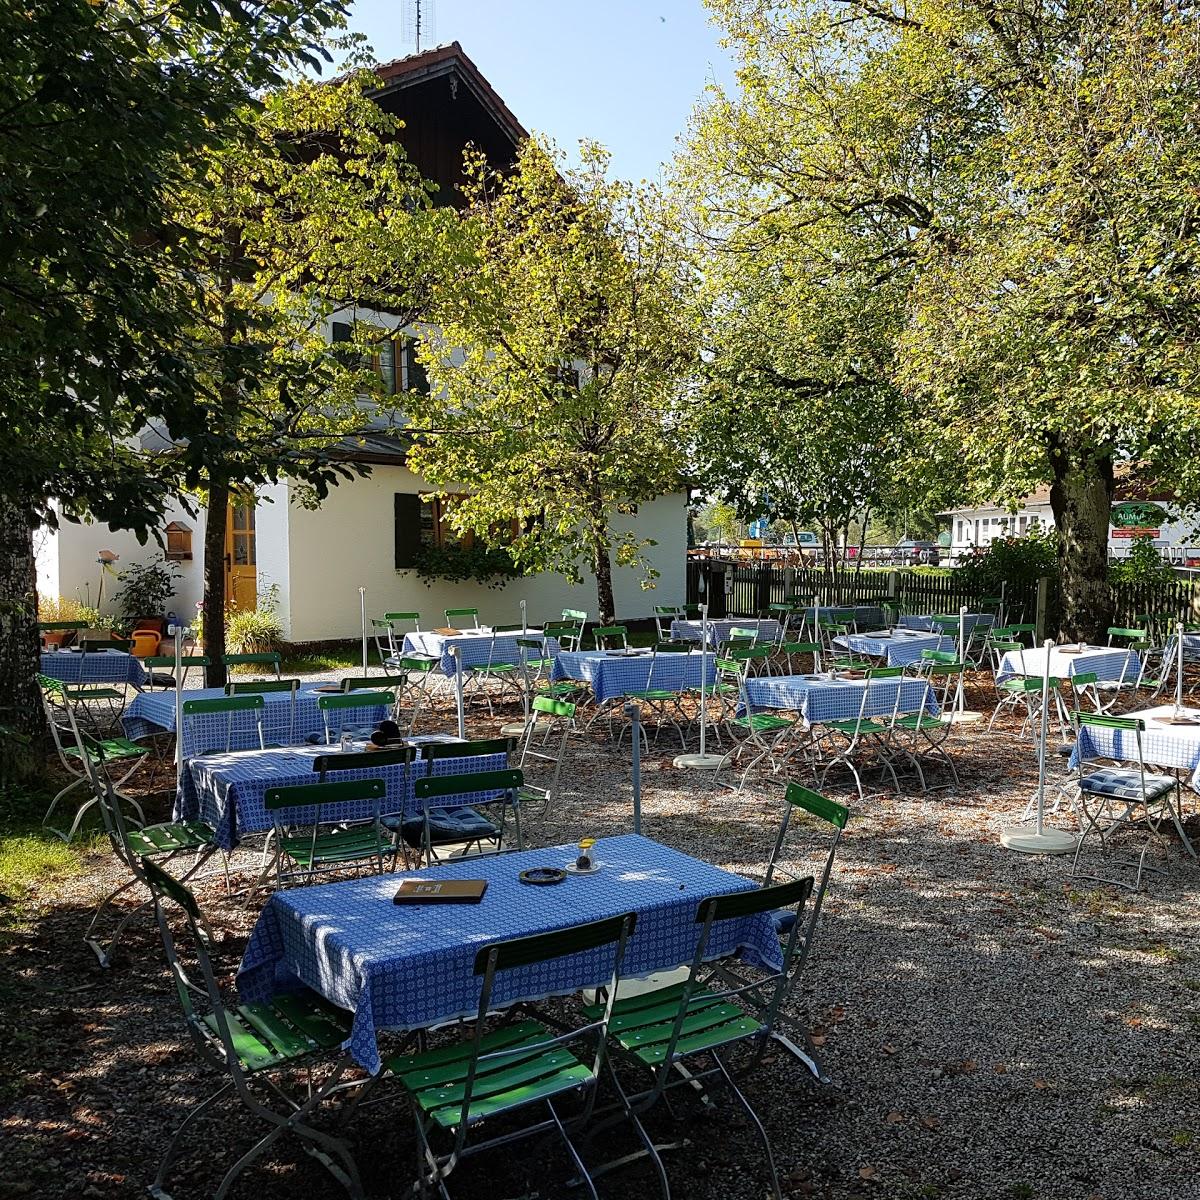 Restaurant "Aumühle" in  Egling